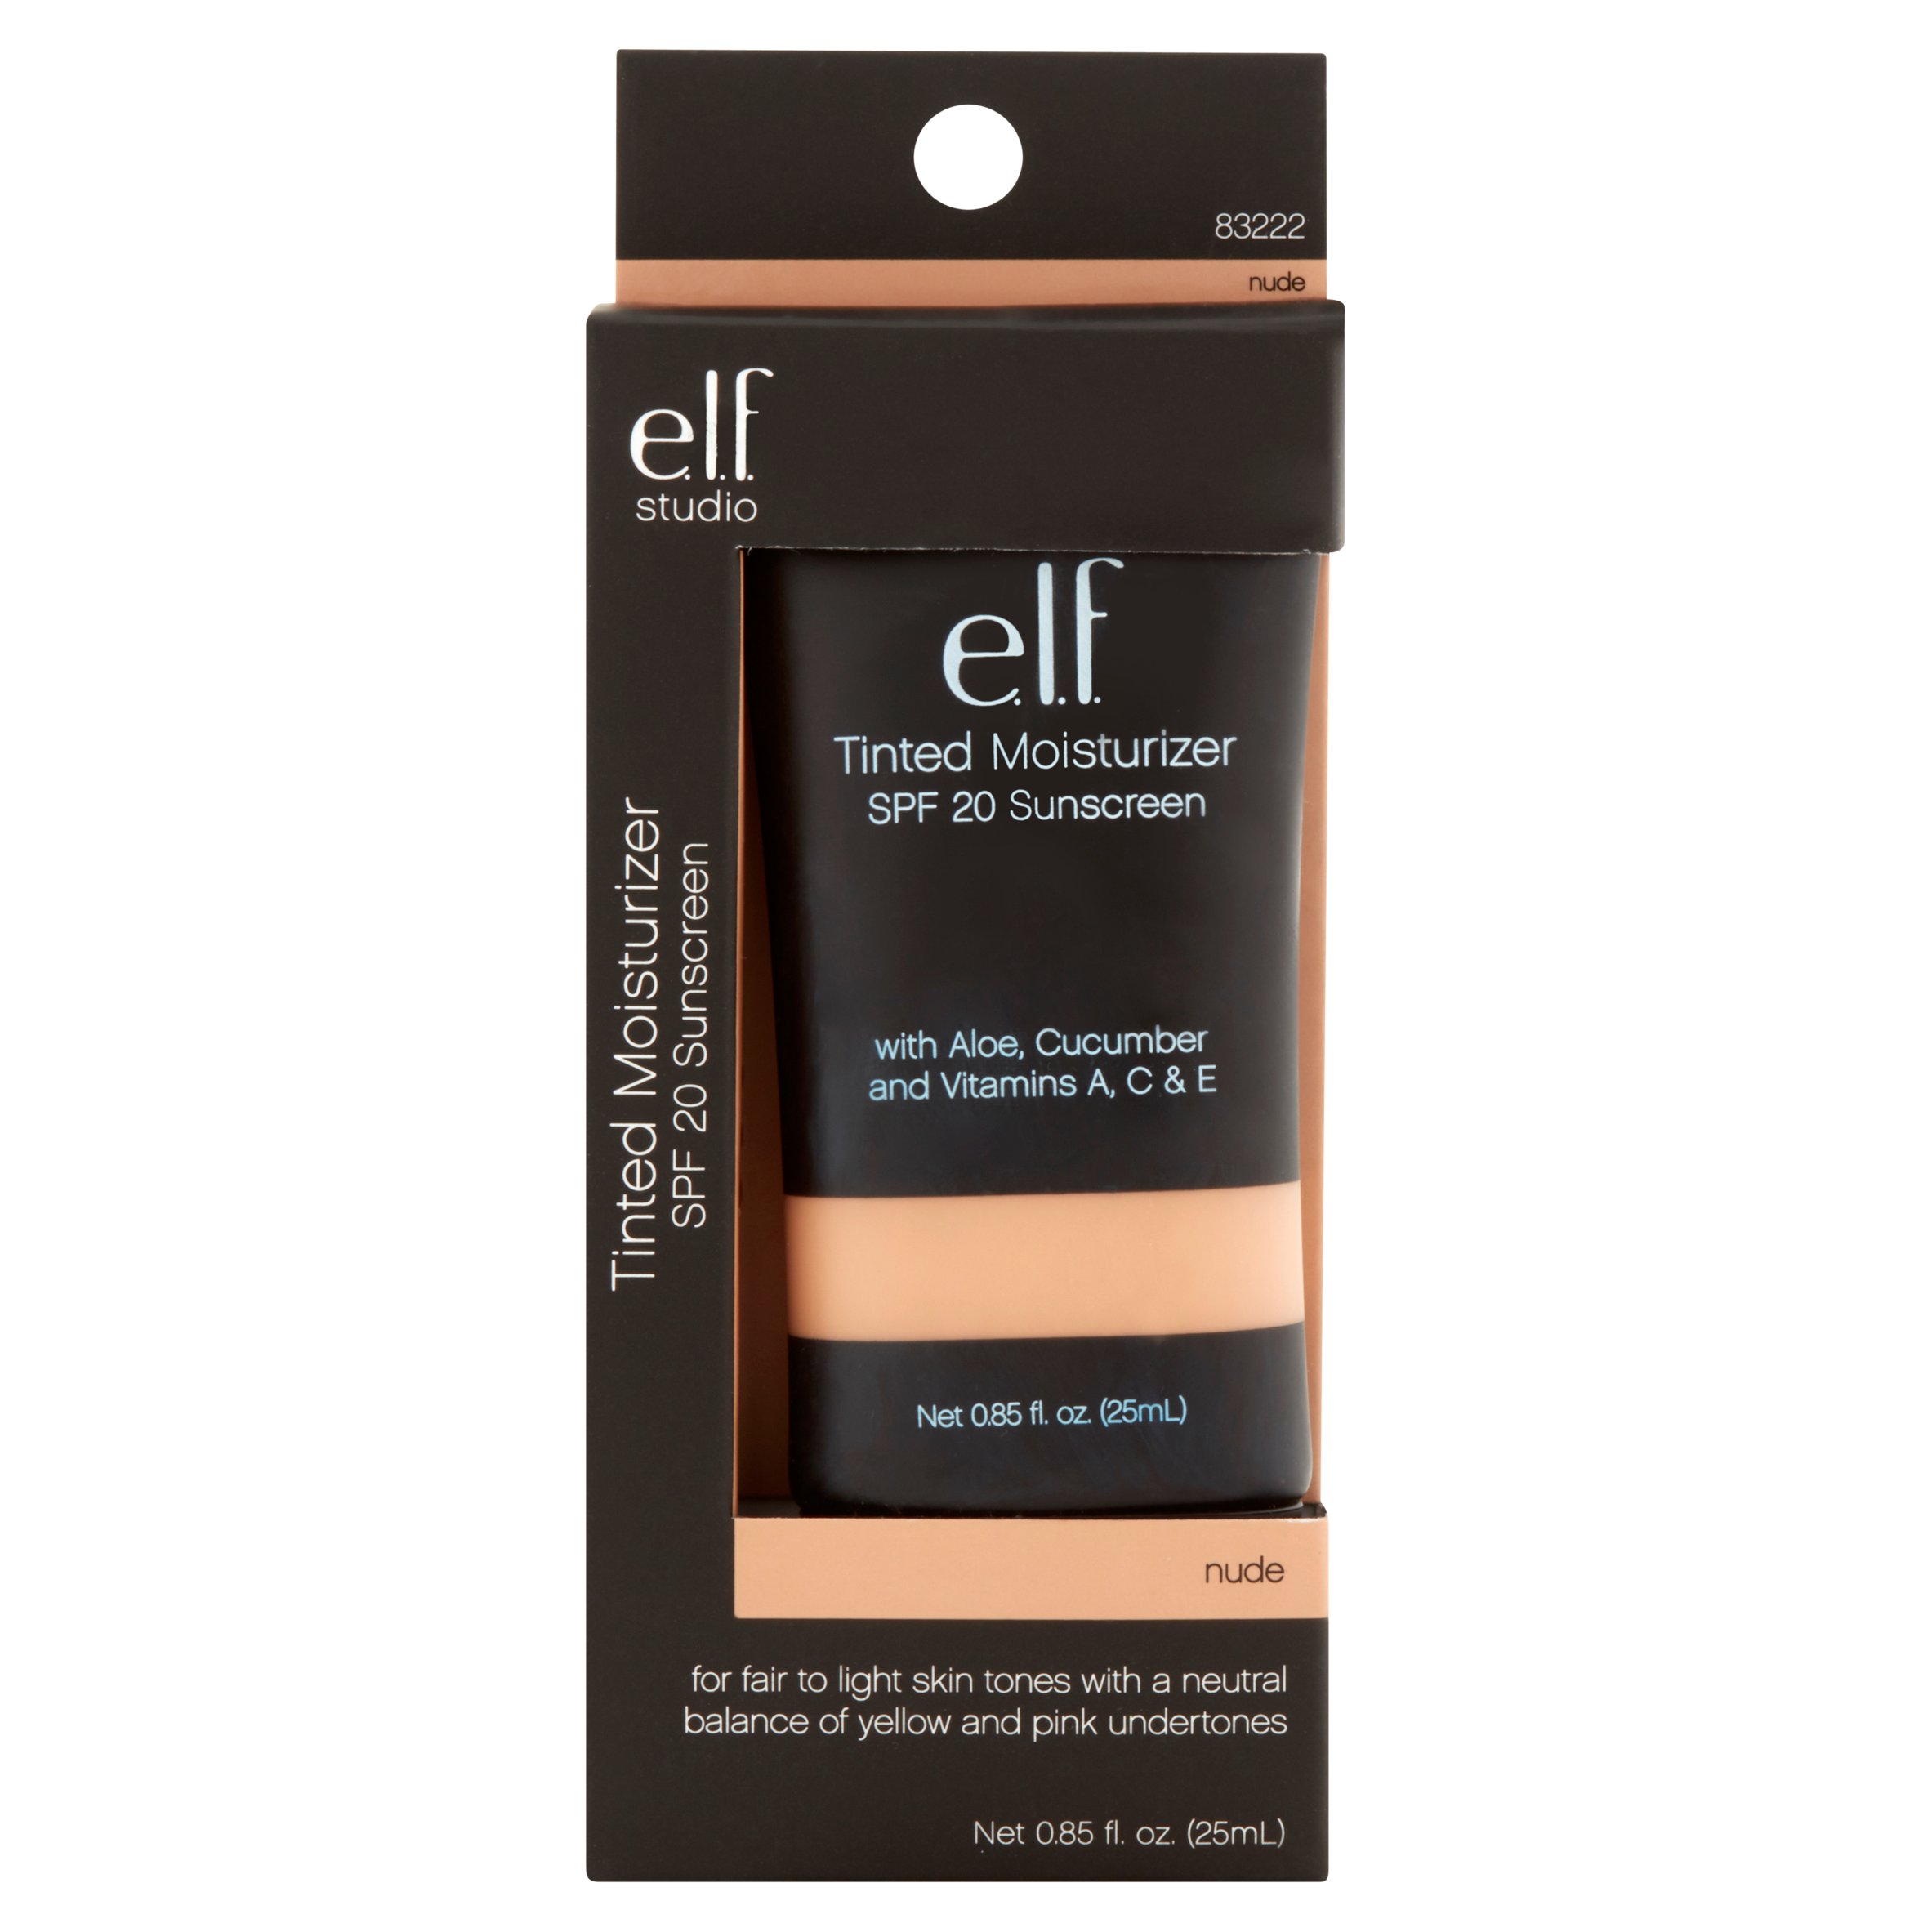 e.l.f. Cosmetics Tinted Moisturizer, SPF 20, Nude, 0.88 fl oz - image 1 of 4